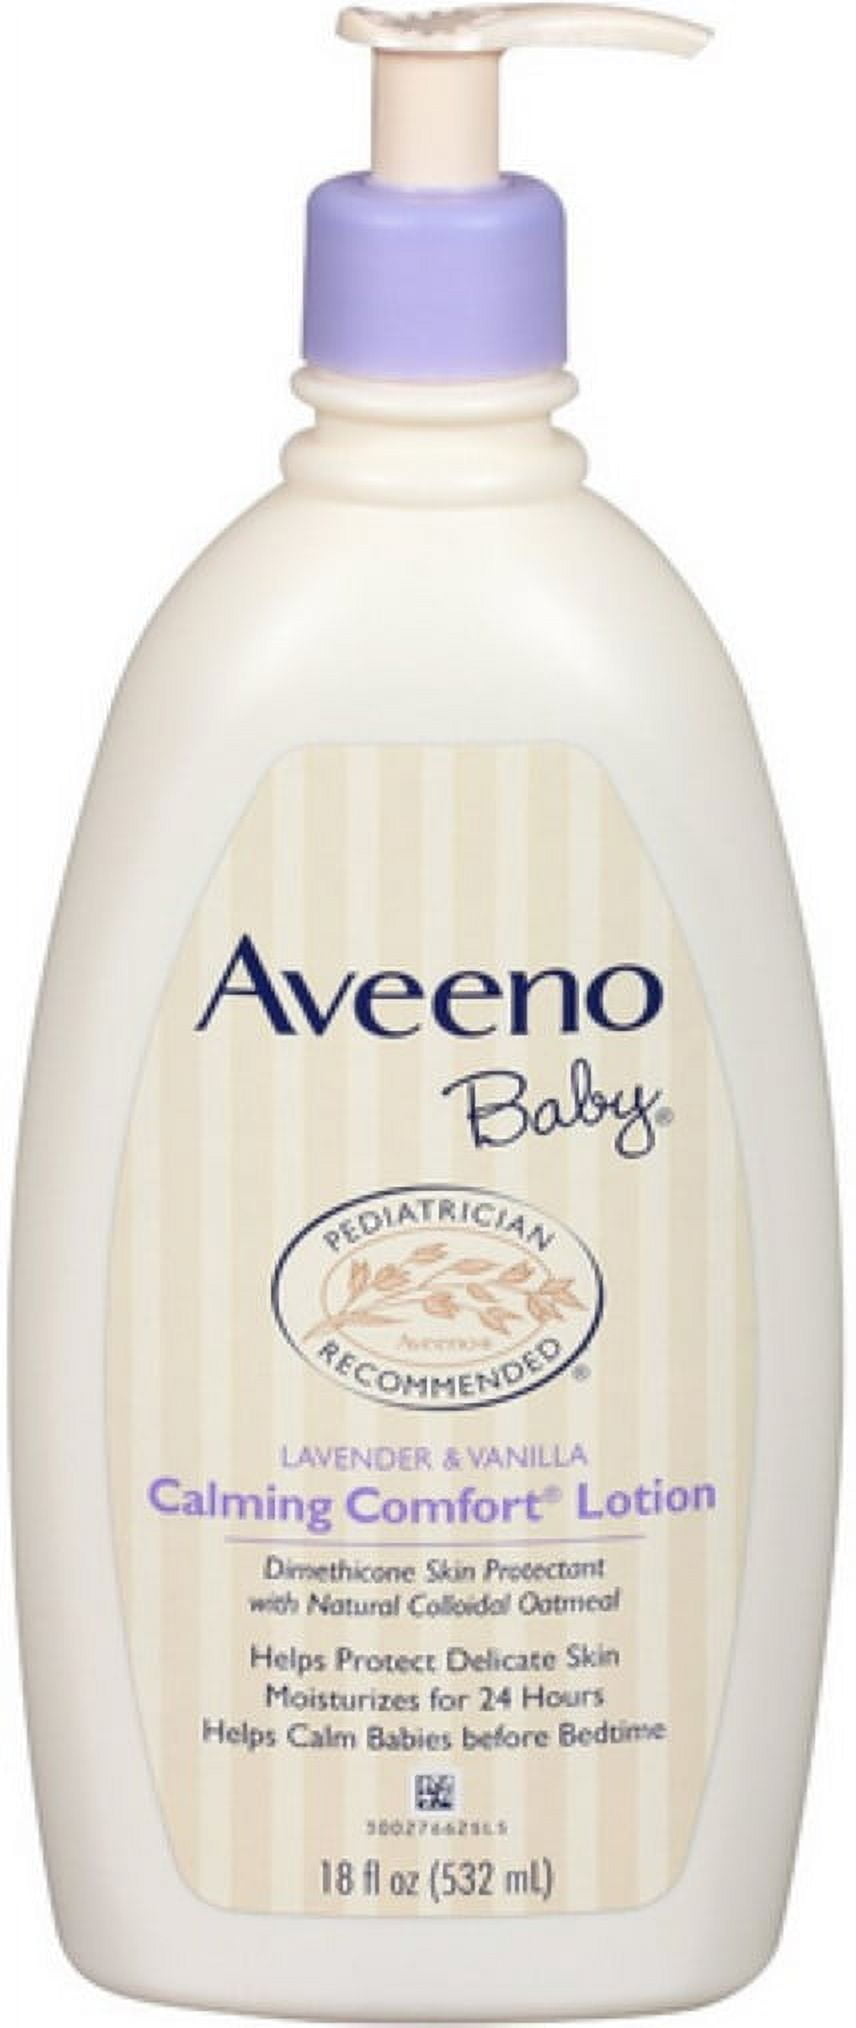 Aveeno Baby Calming Comfort Bedtime Lotion, 150 ml (Pack of 1)